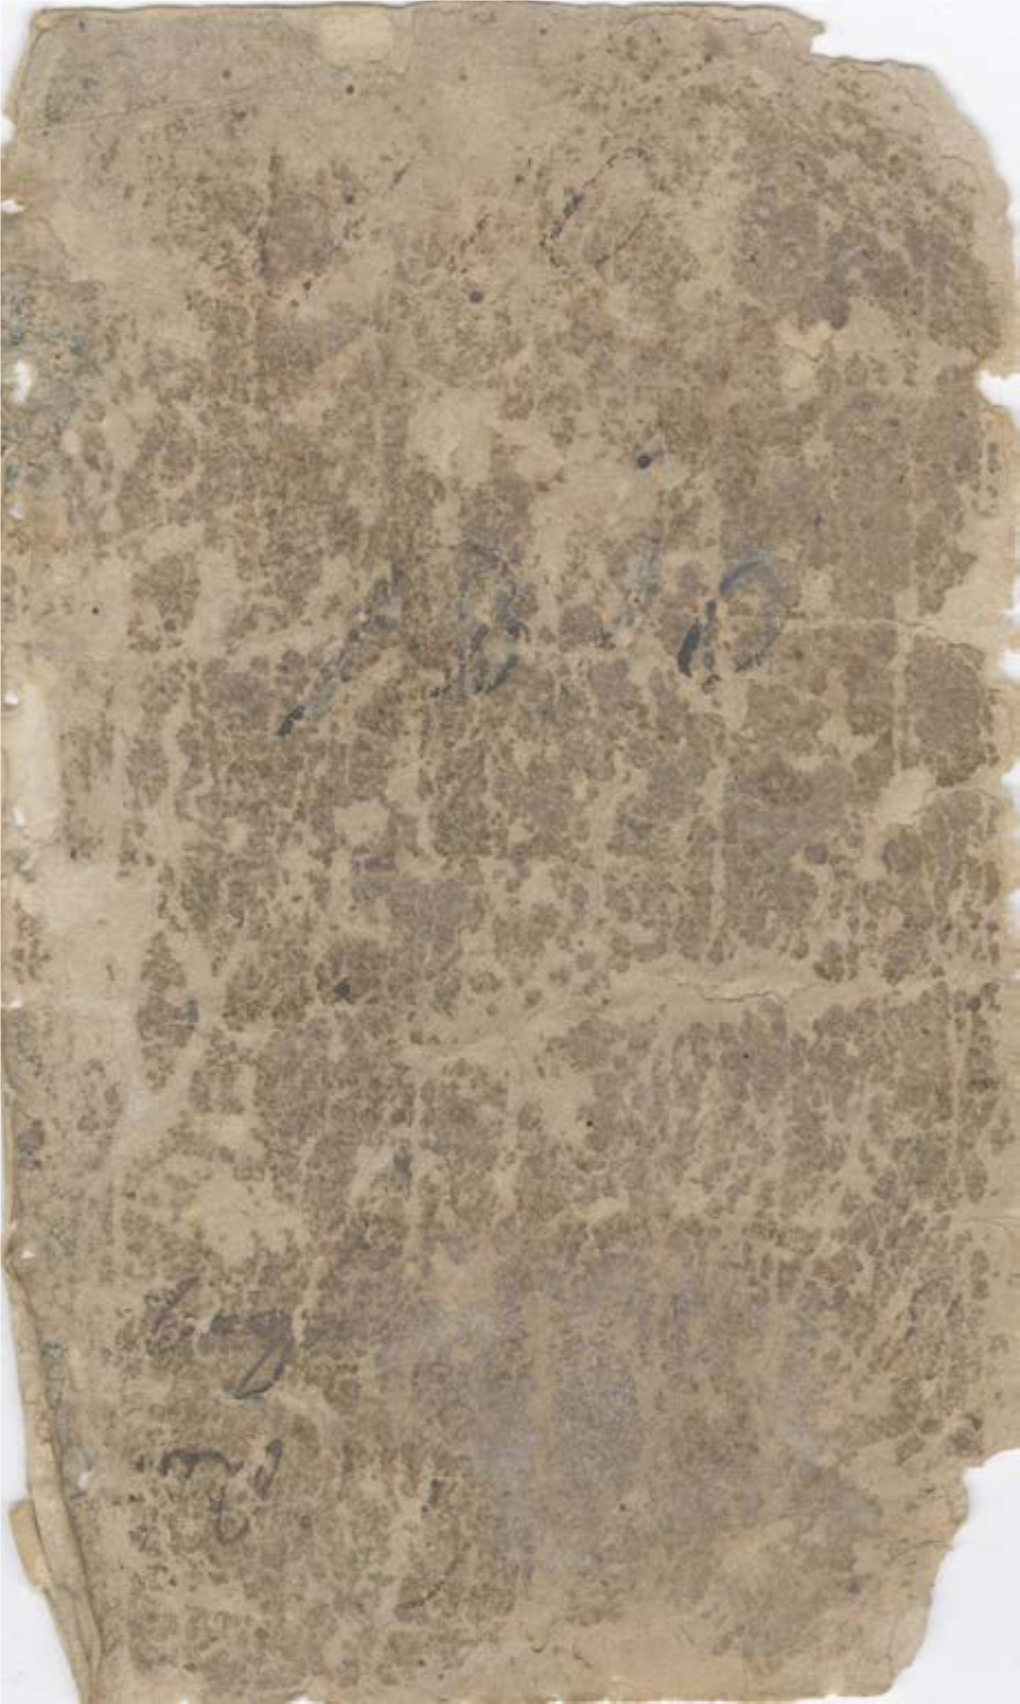 The Connecticut Register, ... 1810